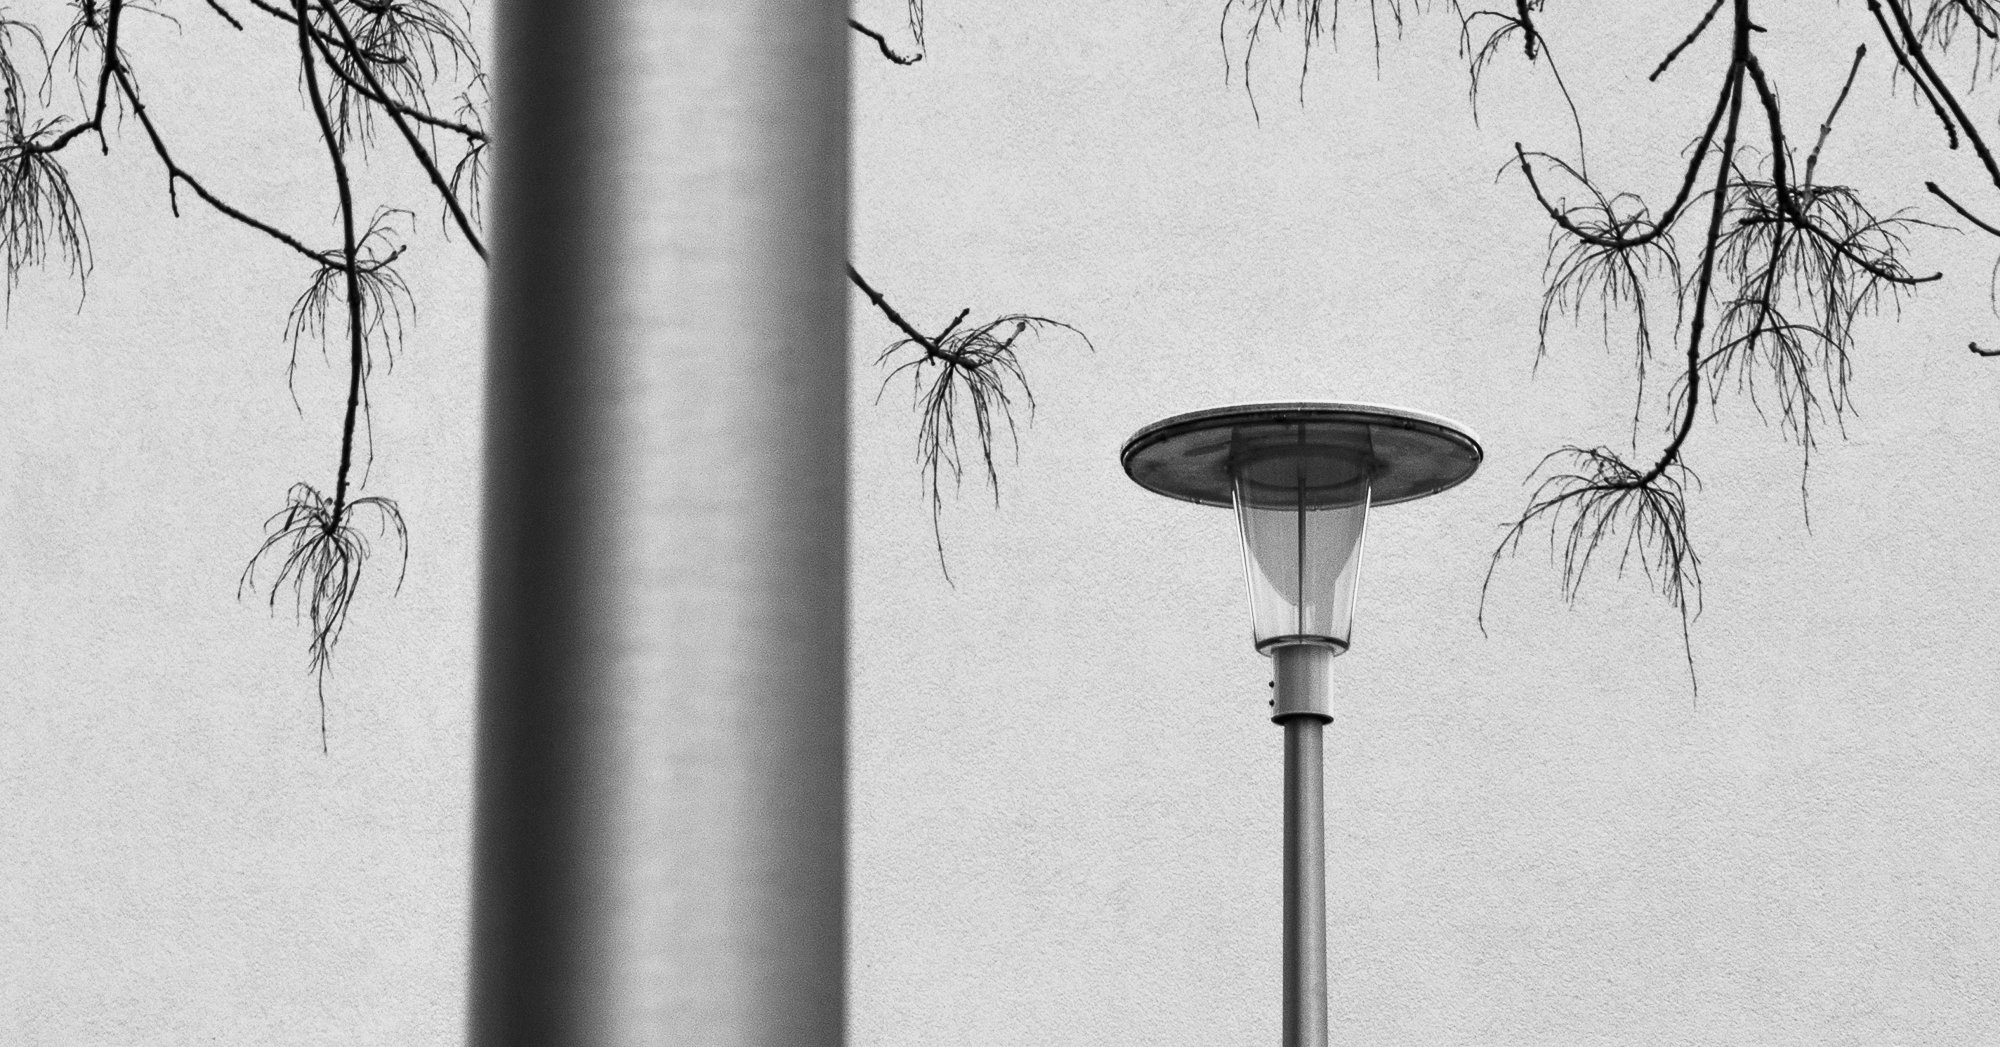 Adam Mazek Photography Warsaw (Warszawa) 2019. Post: "The tragedy of my artistic activity." Perspective. Street lamp. Geometry. Minimalism. Featured image.